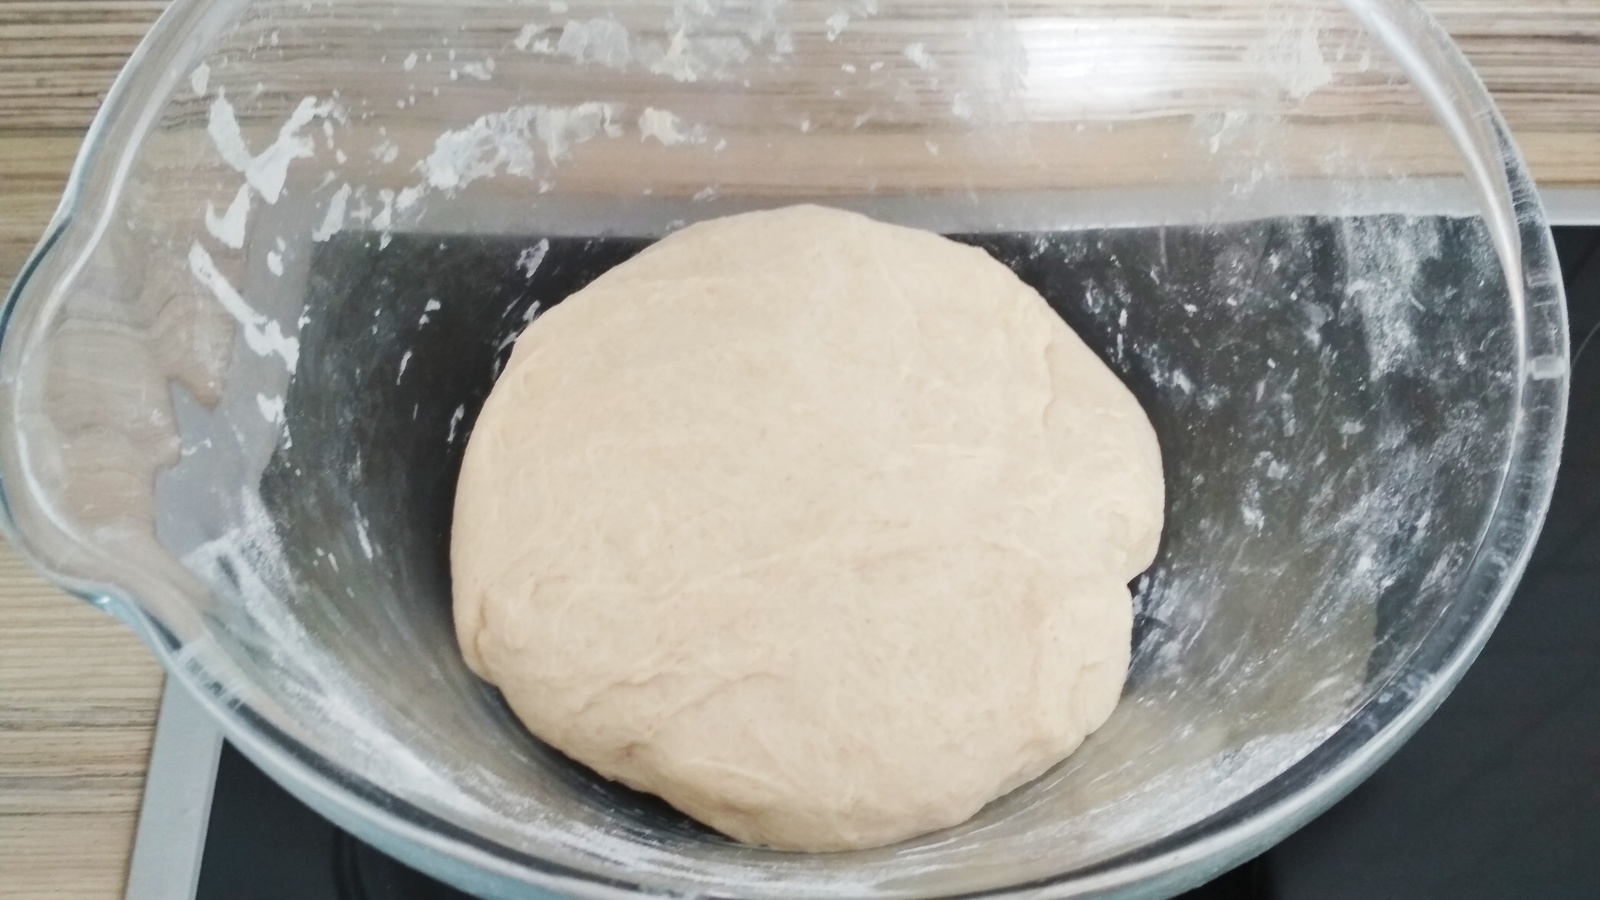 Разморозить дрожжевое тесто в микроволновке